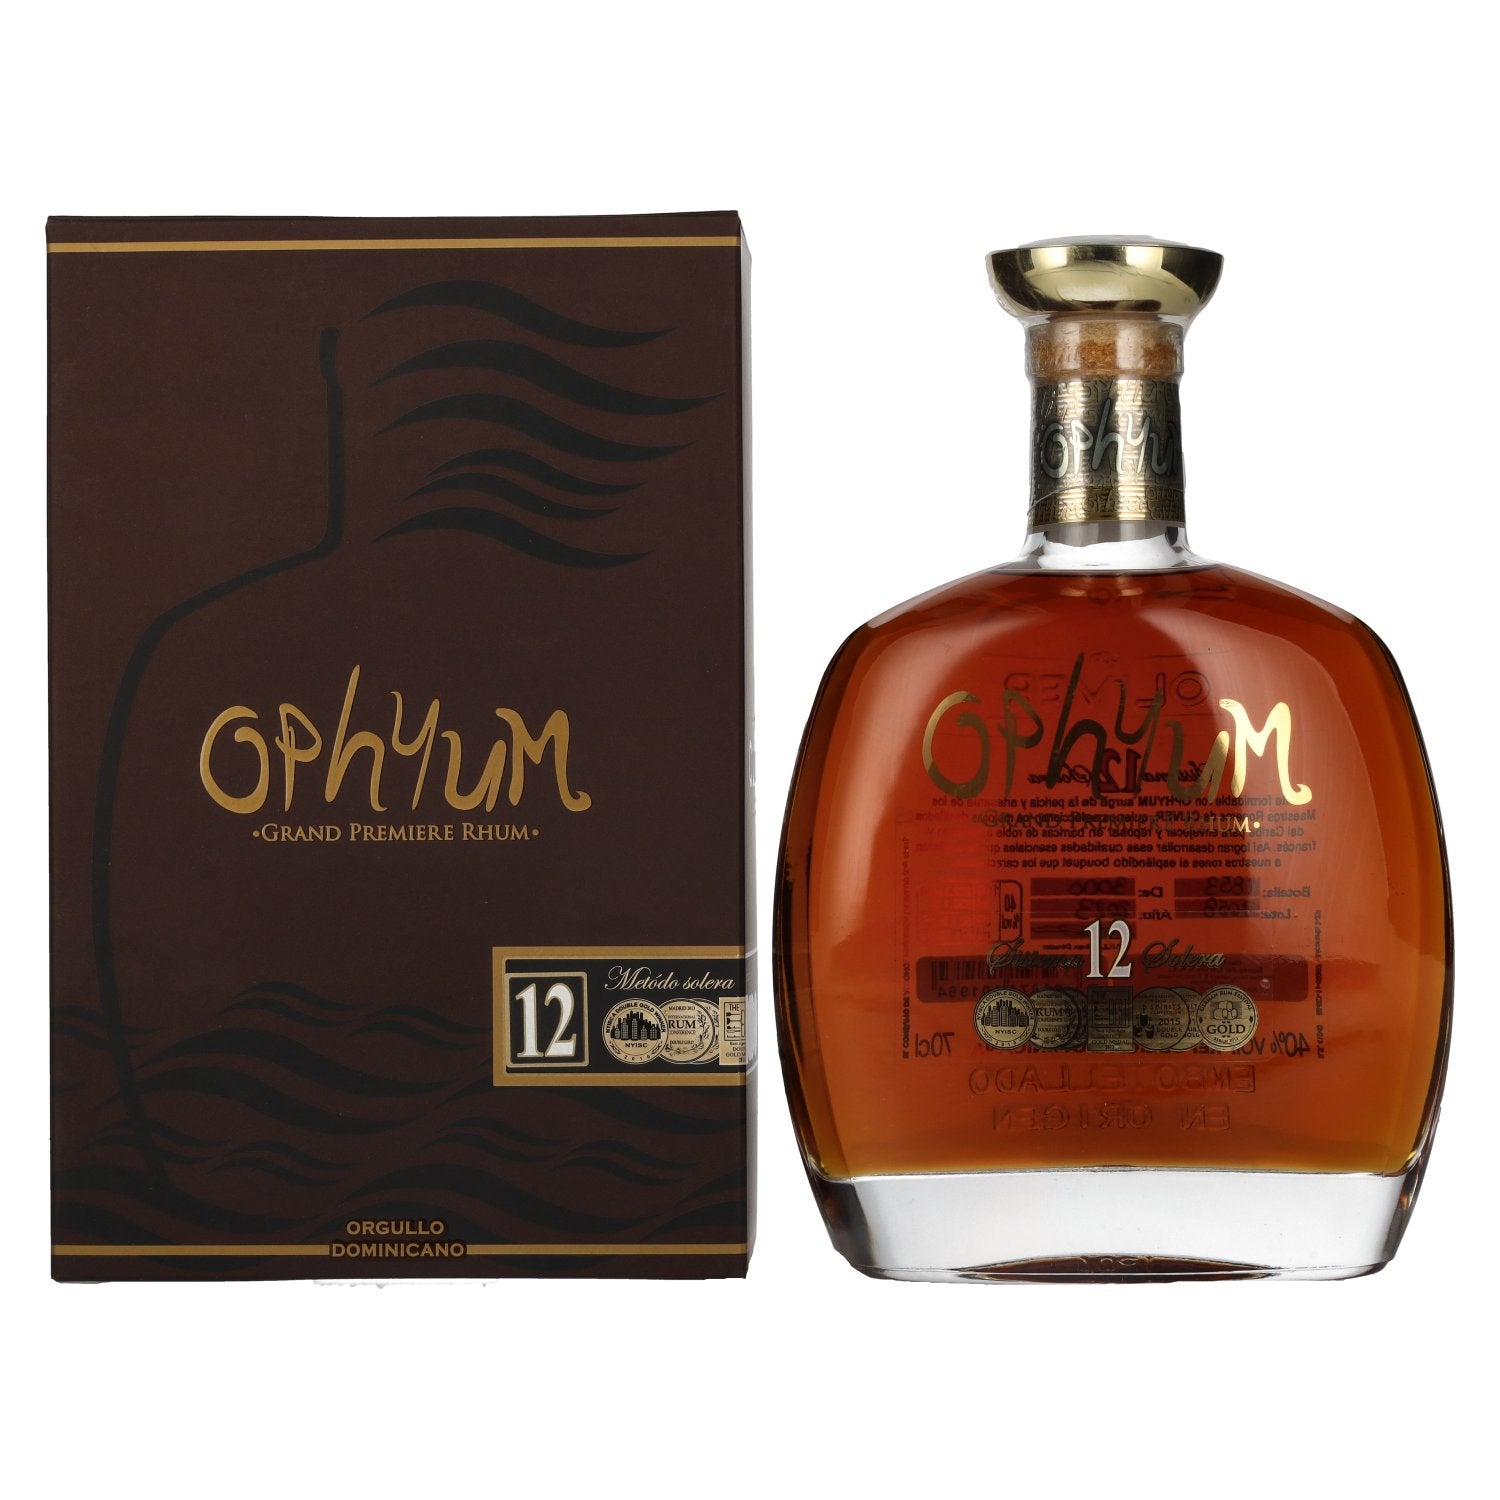 Ophyum 12 Metodo Solera Grand Premiere Rhum 40% Vol. 0,7l in Giftbox